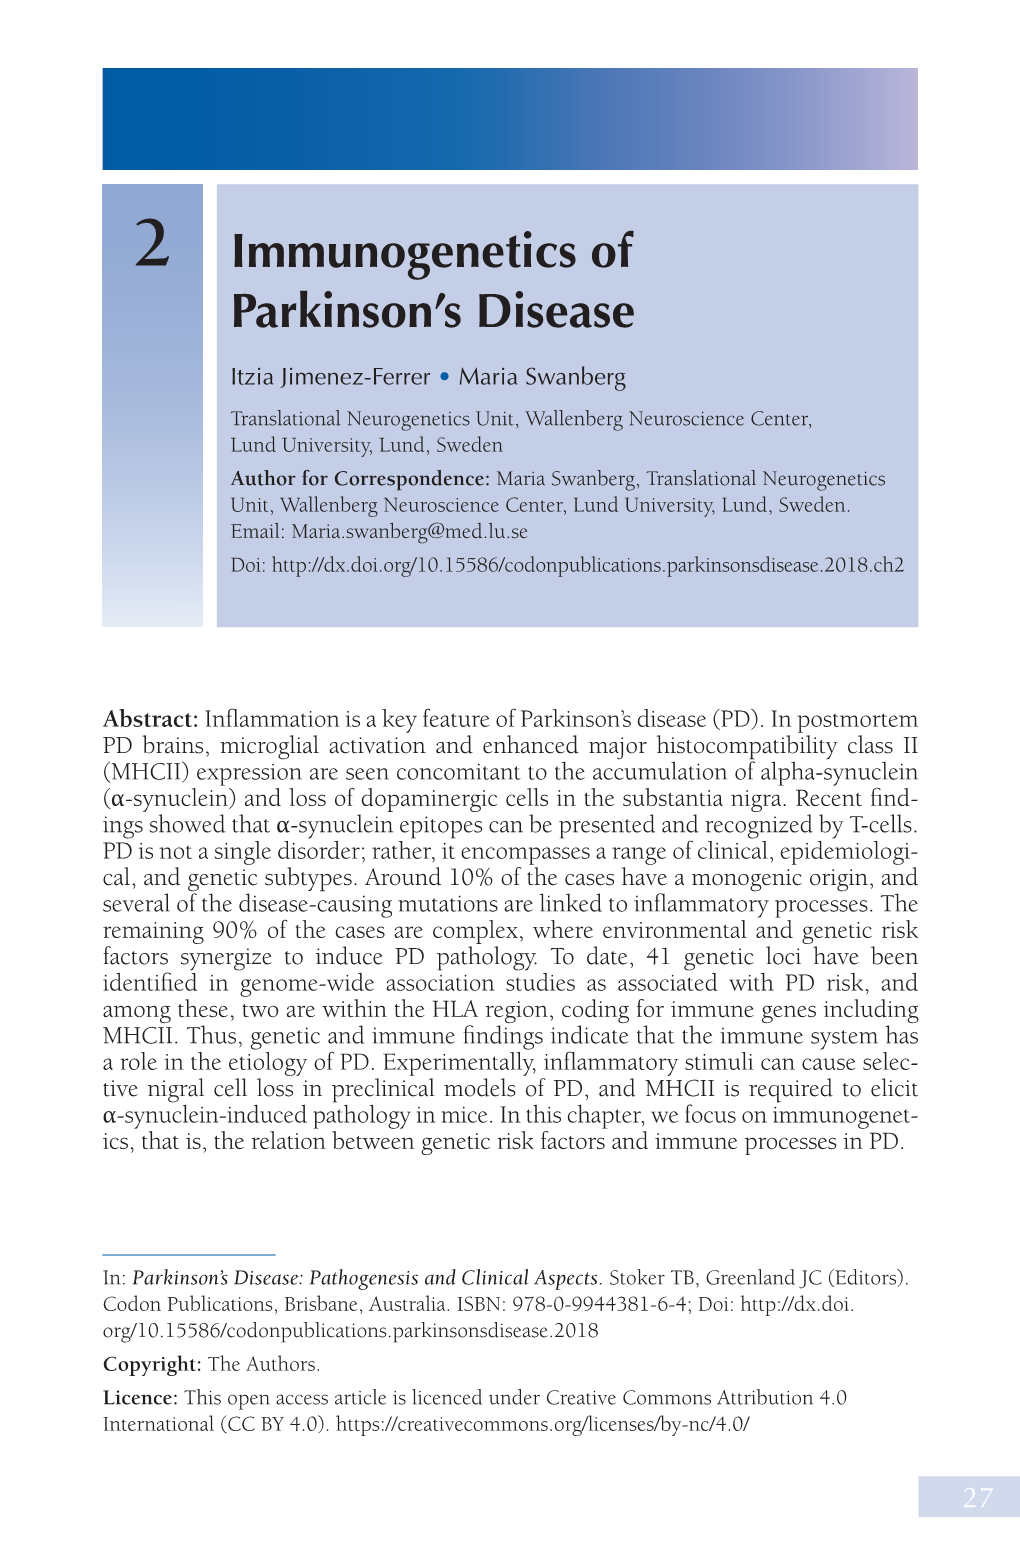 2 Immunogenetics of Parkinson's Disease